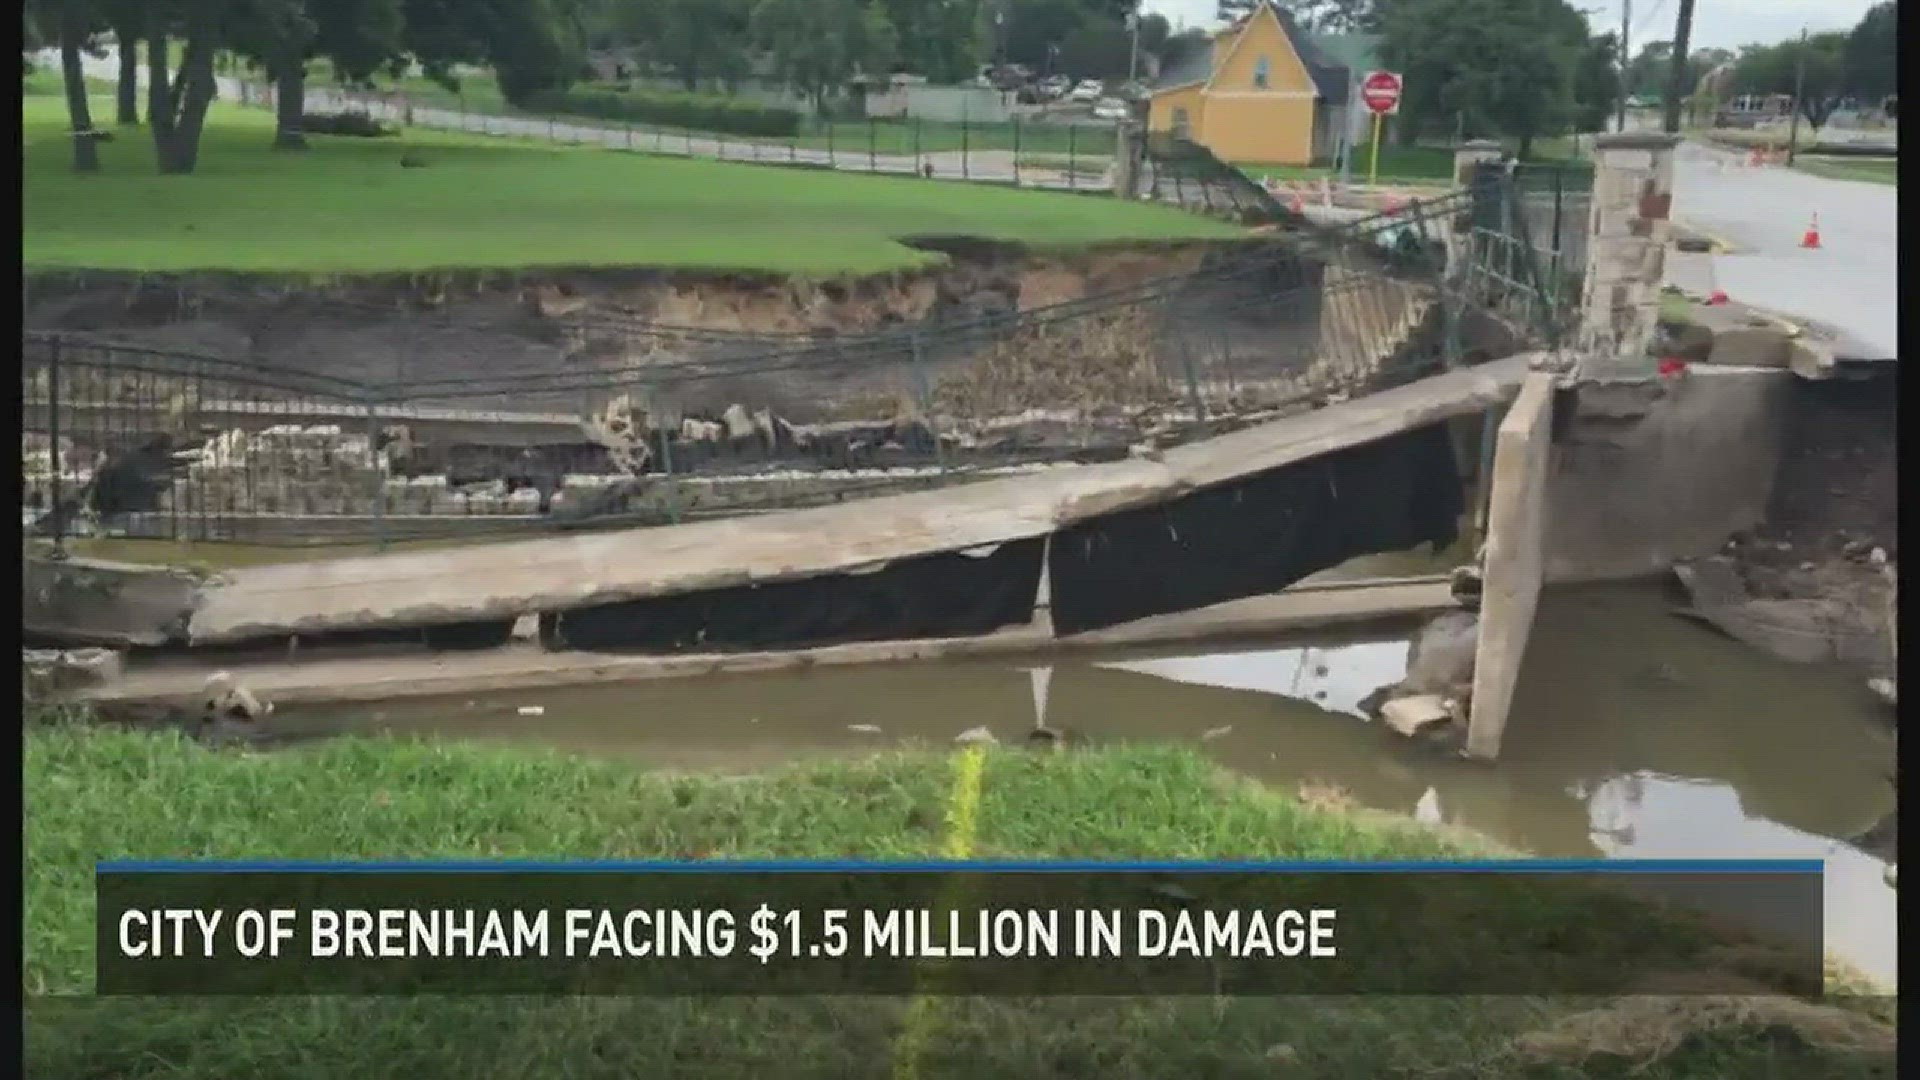 Brenham officials estimate at 1.5 million dollars of flood damage to infrastructure.